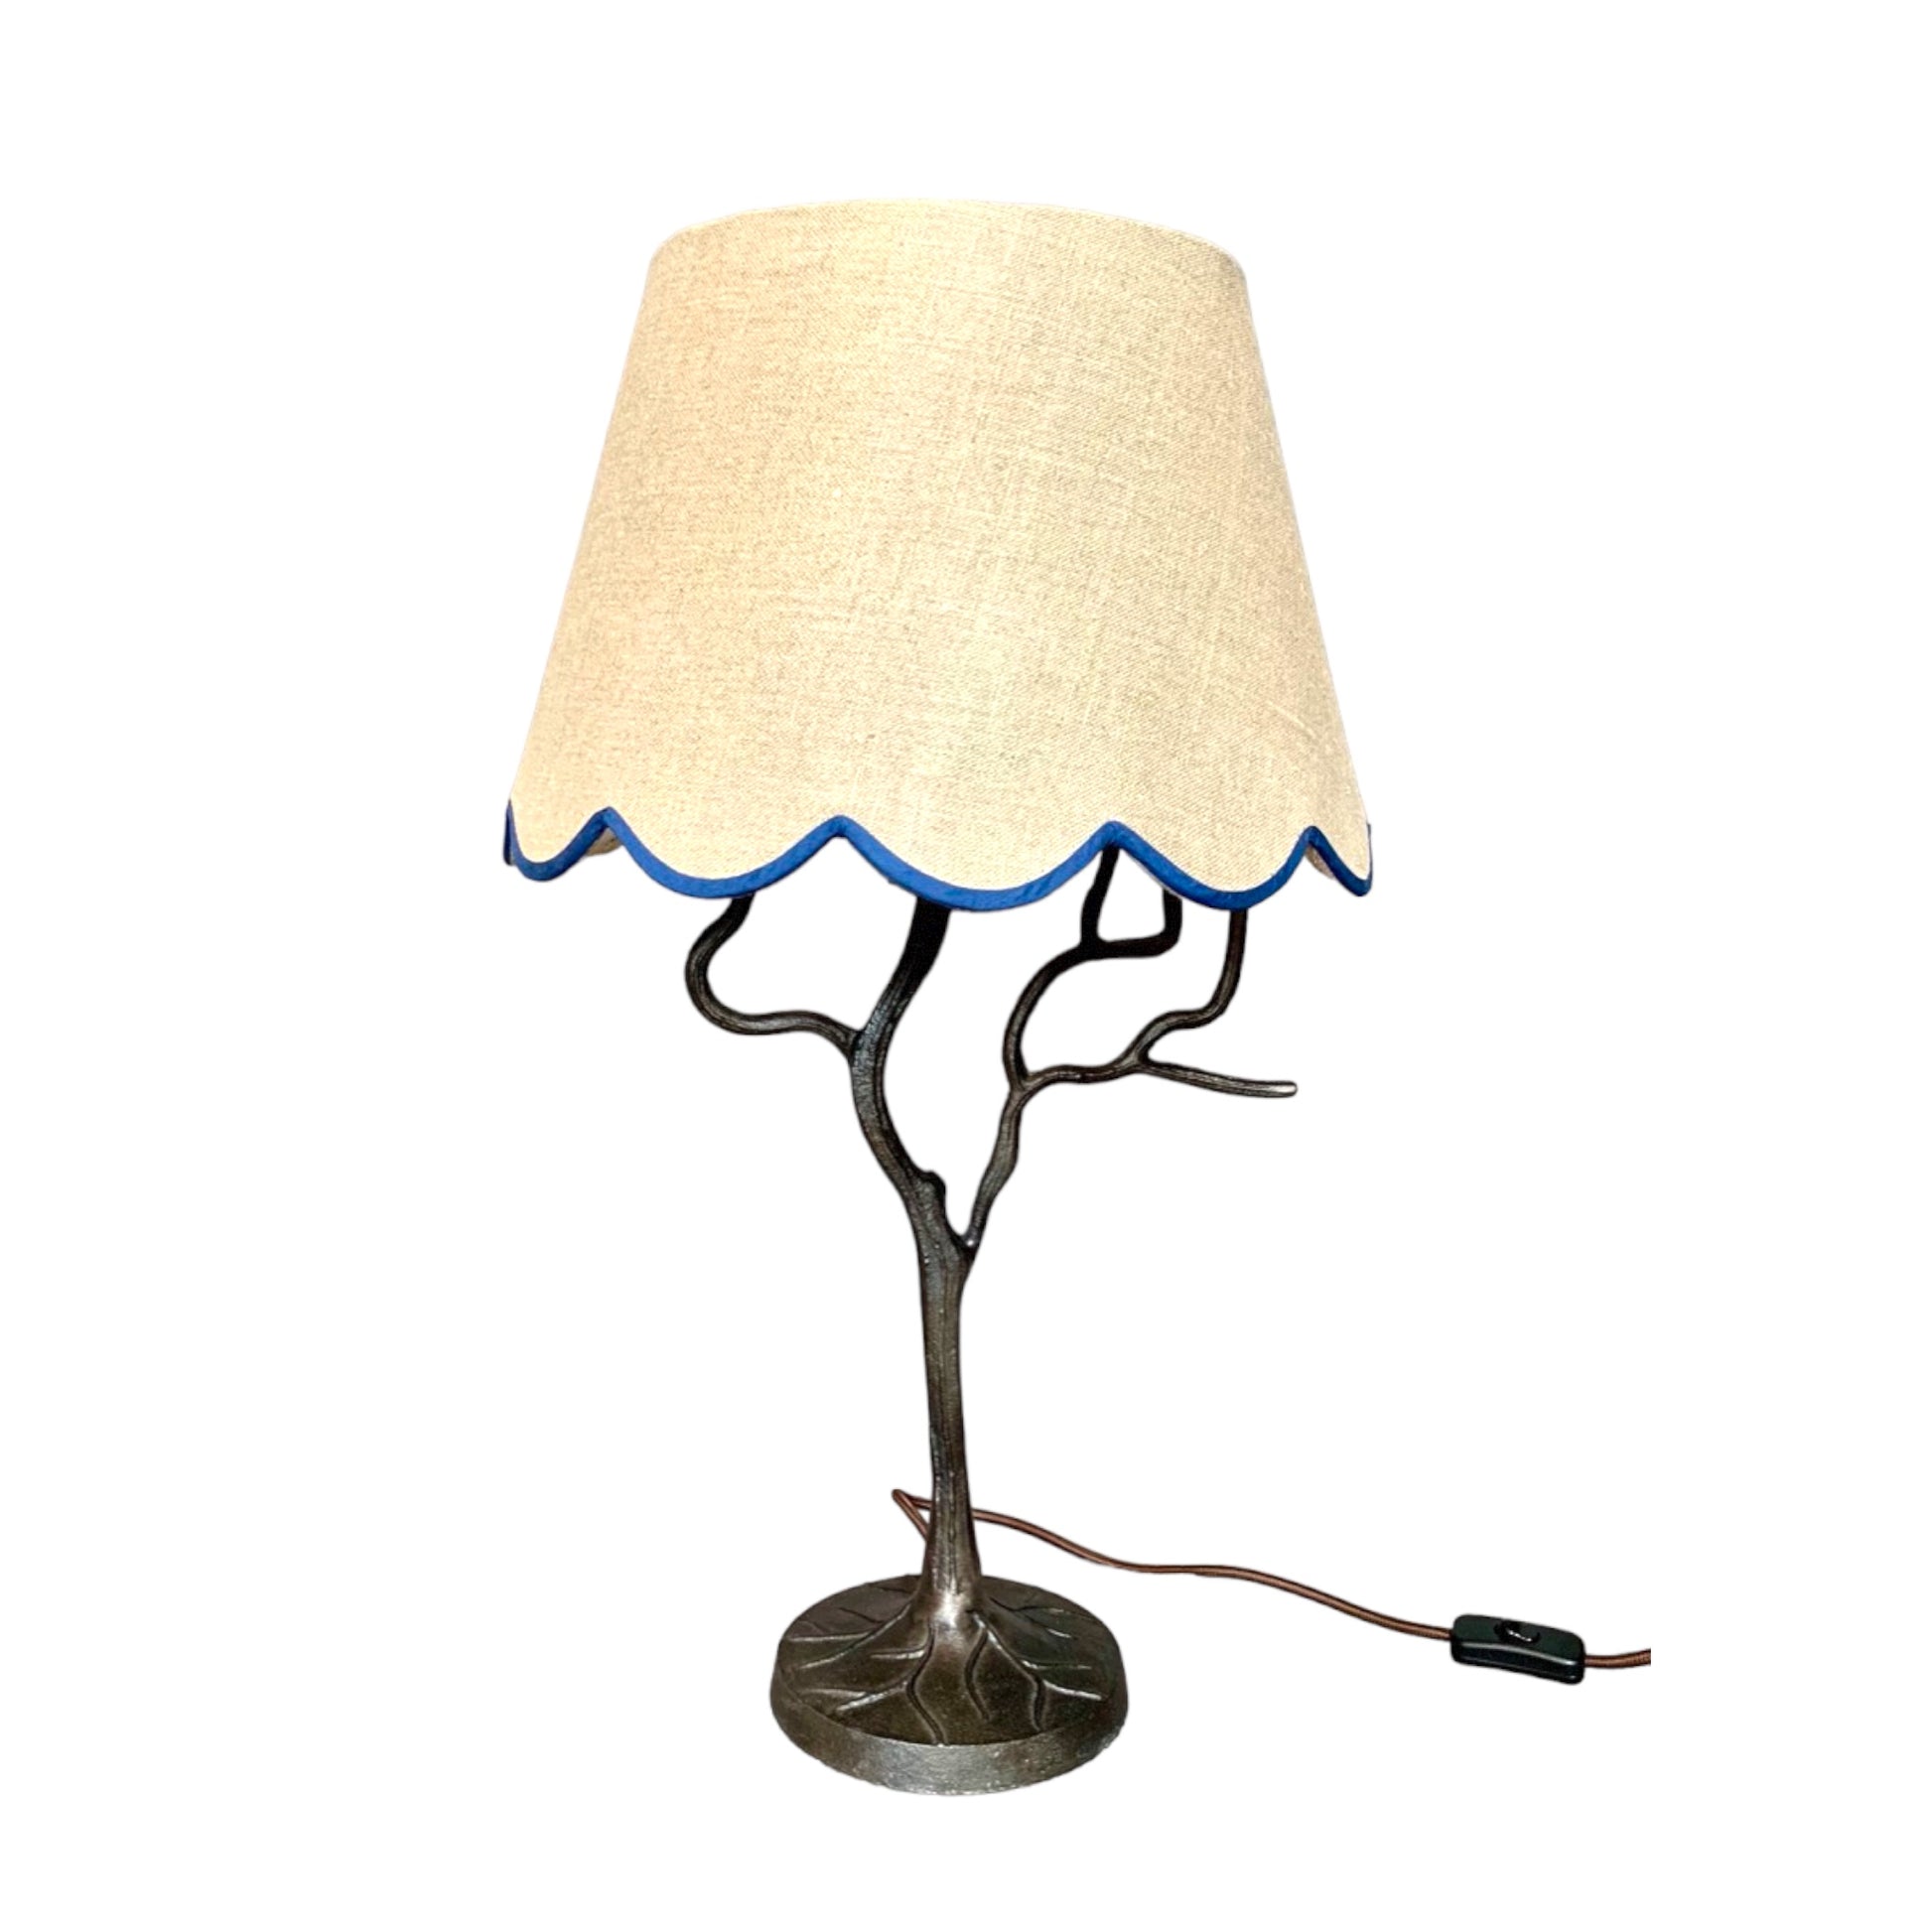 Adita tree lamp with scallop lampshade